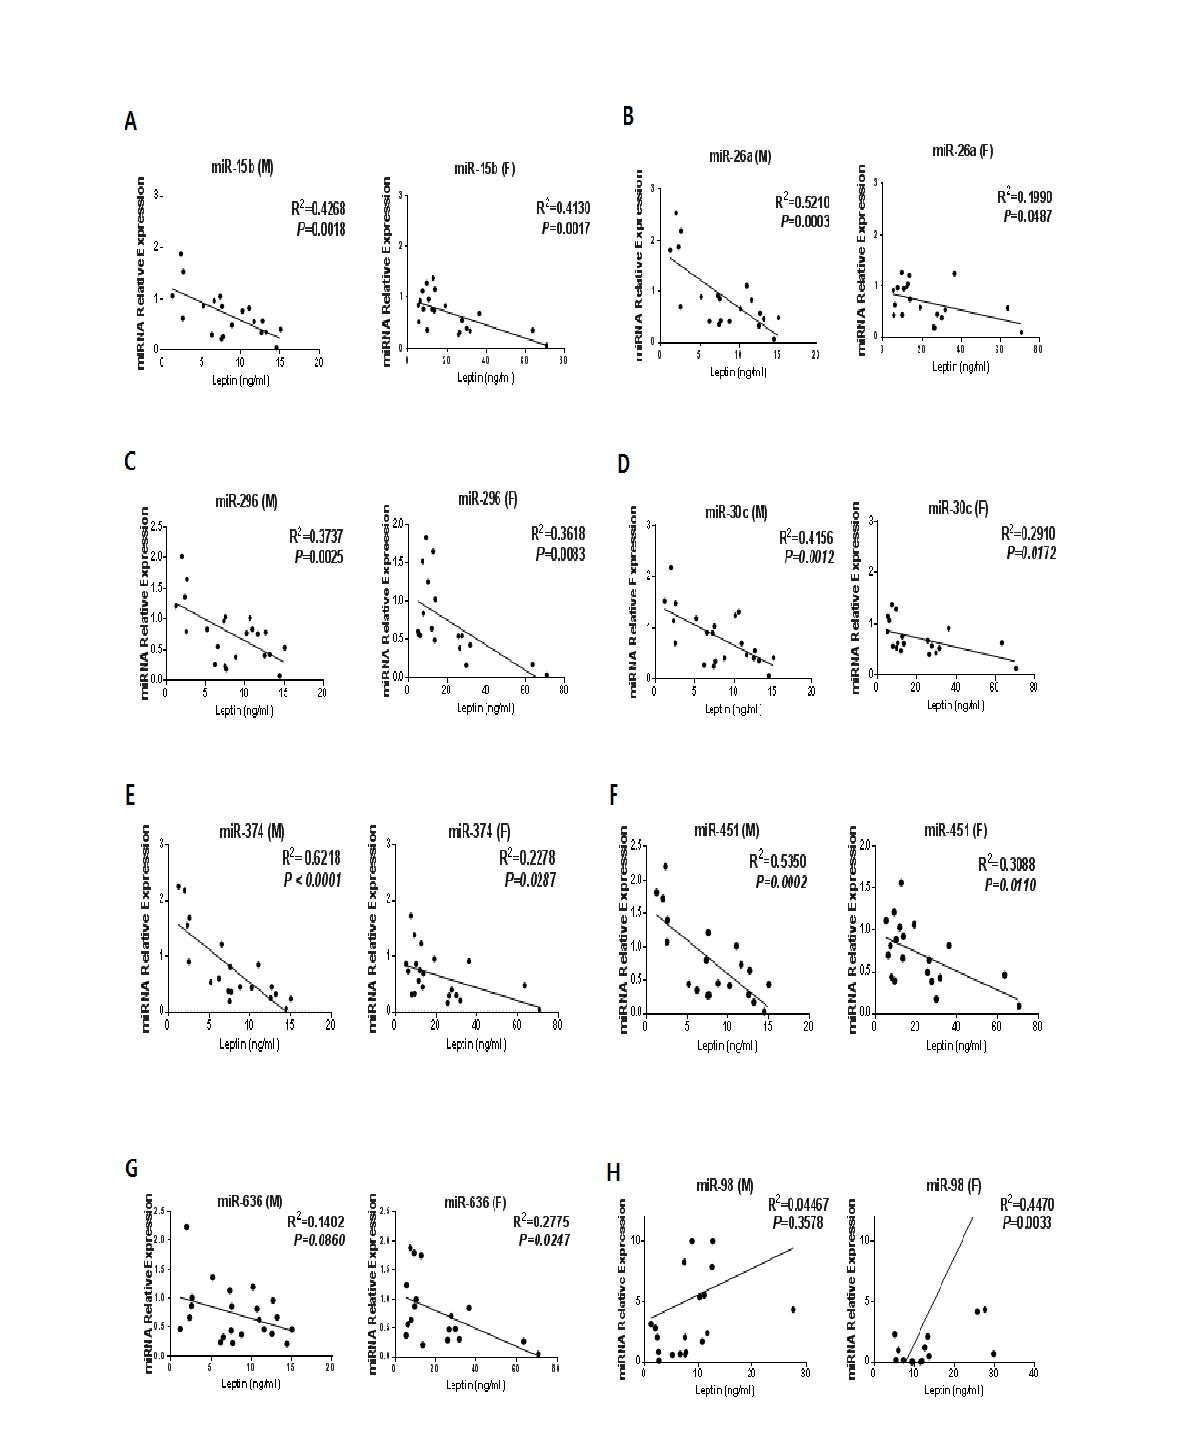 Sex-specific correlation between circulating miRNAs and leptin